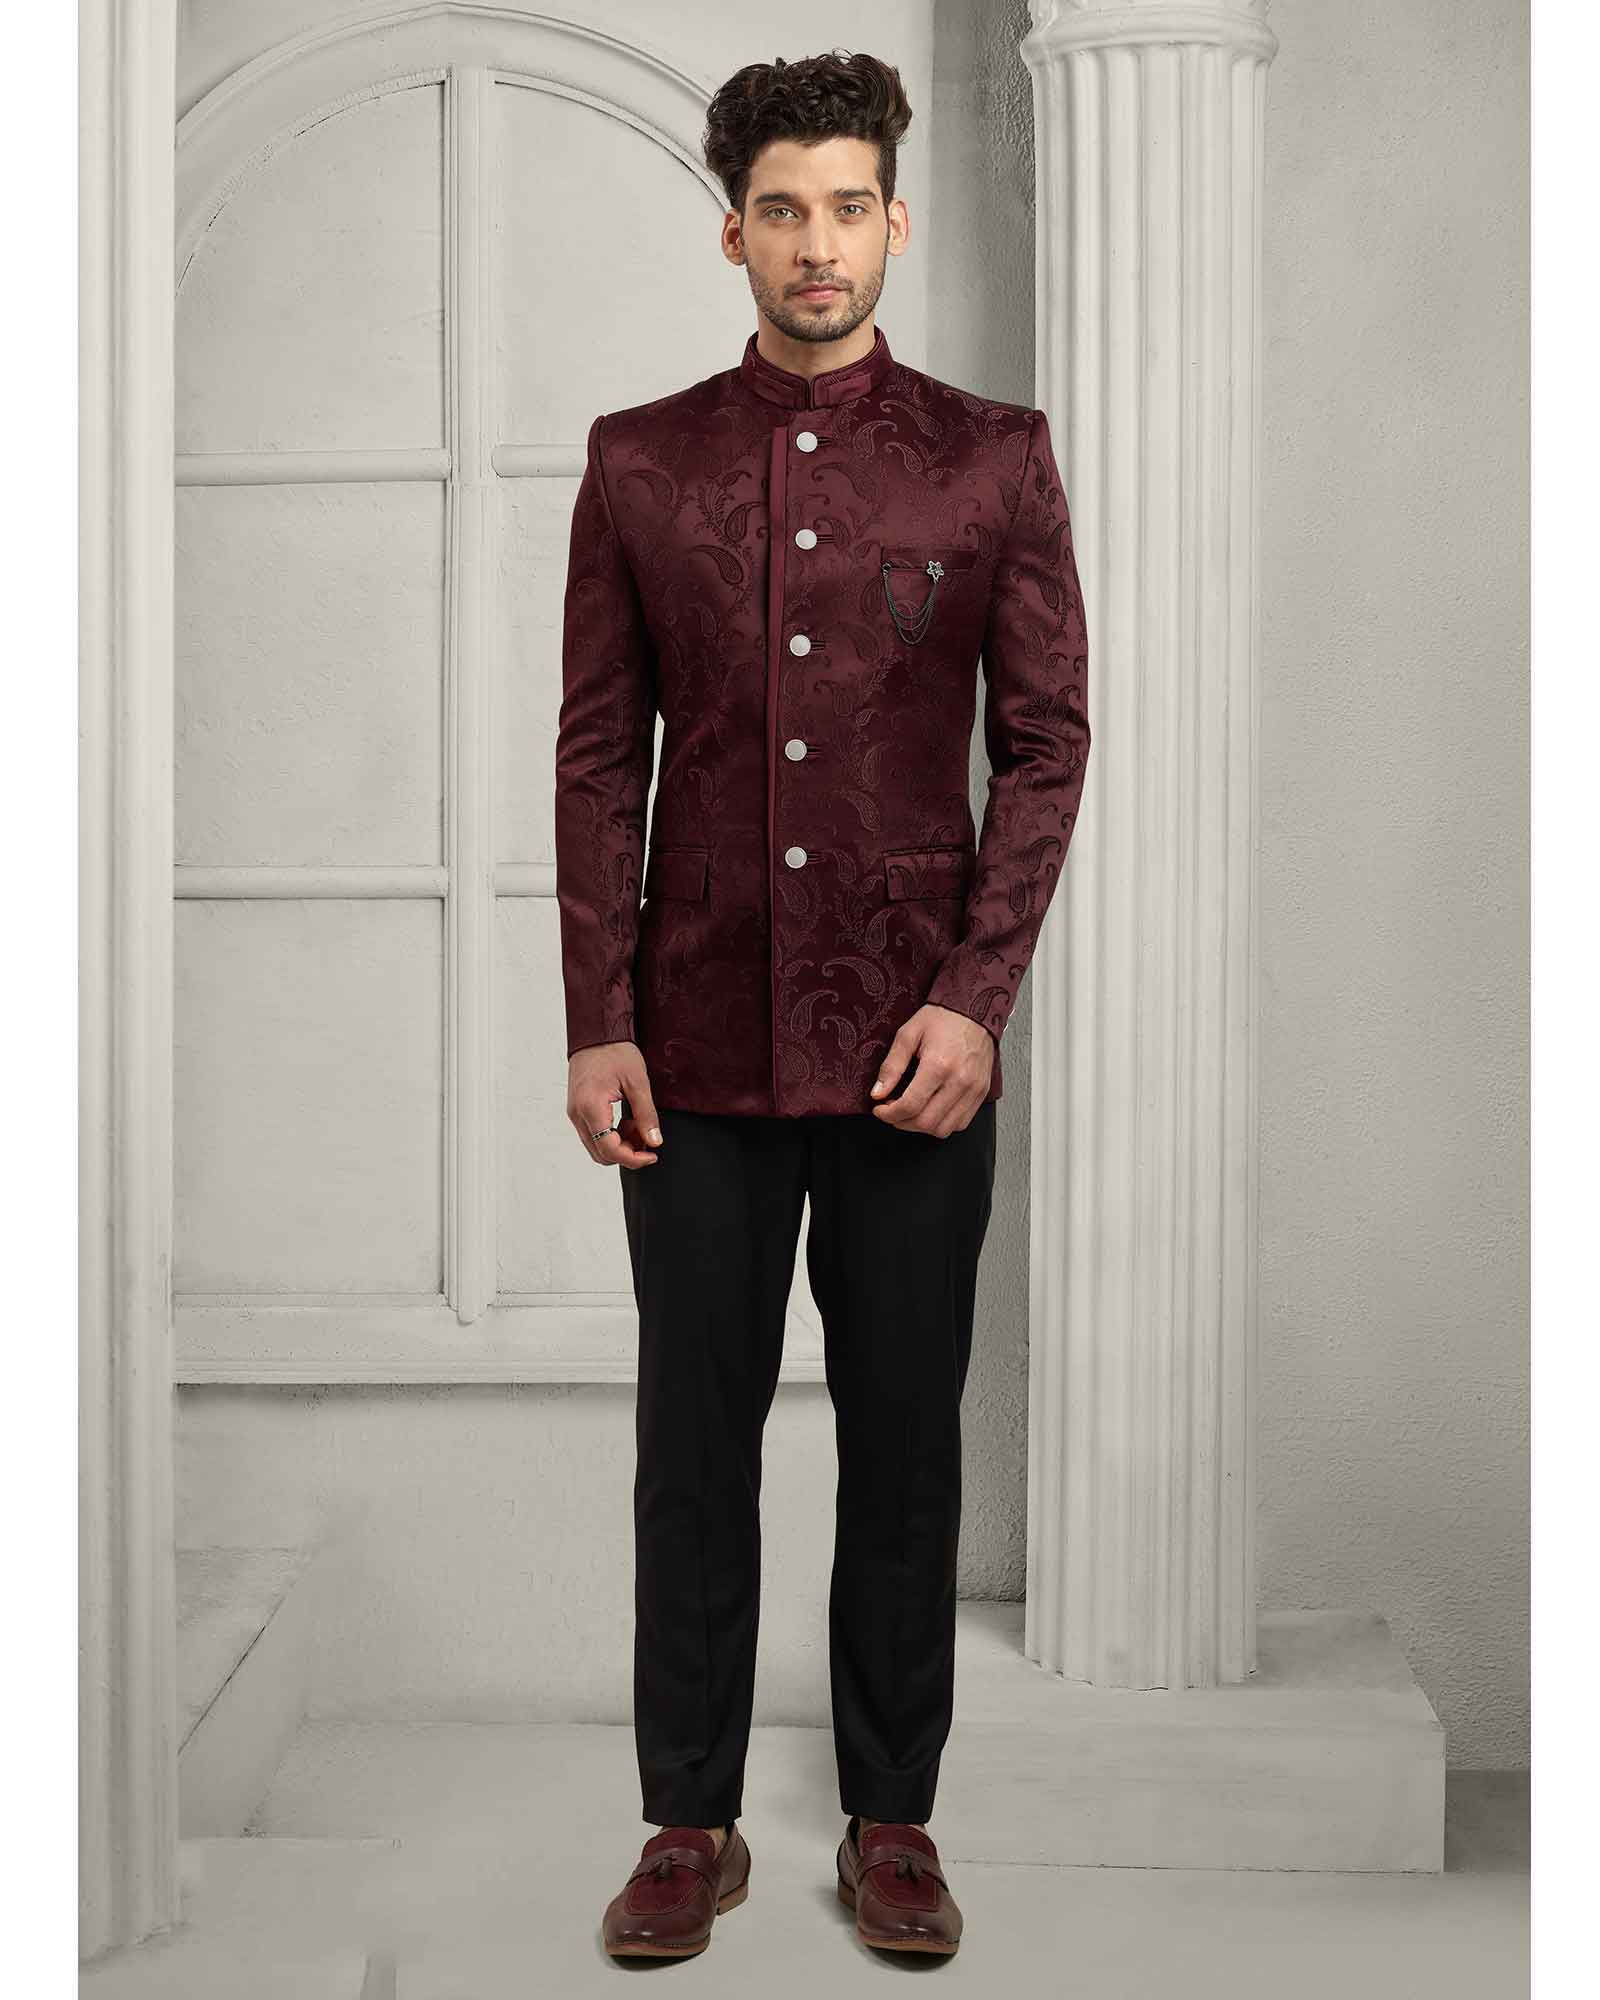 Jodhpuri Suit | Wedding Bandhgala | Buy Designer Jodhpuri Collection